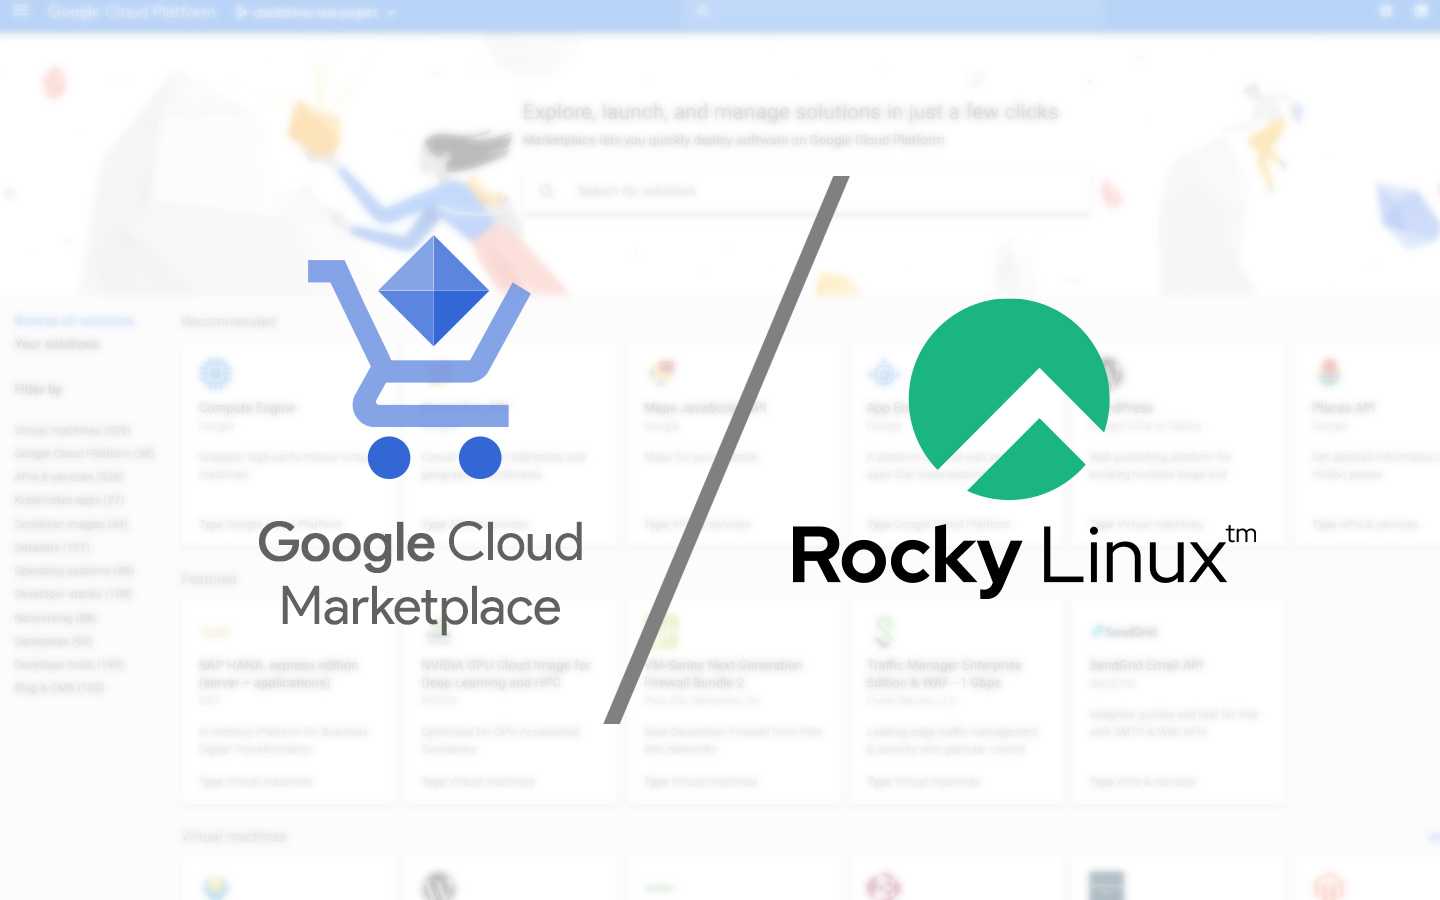 Announcing CIQ's Rocky Linux Solutions on Google Cloud Marketplace